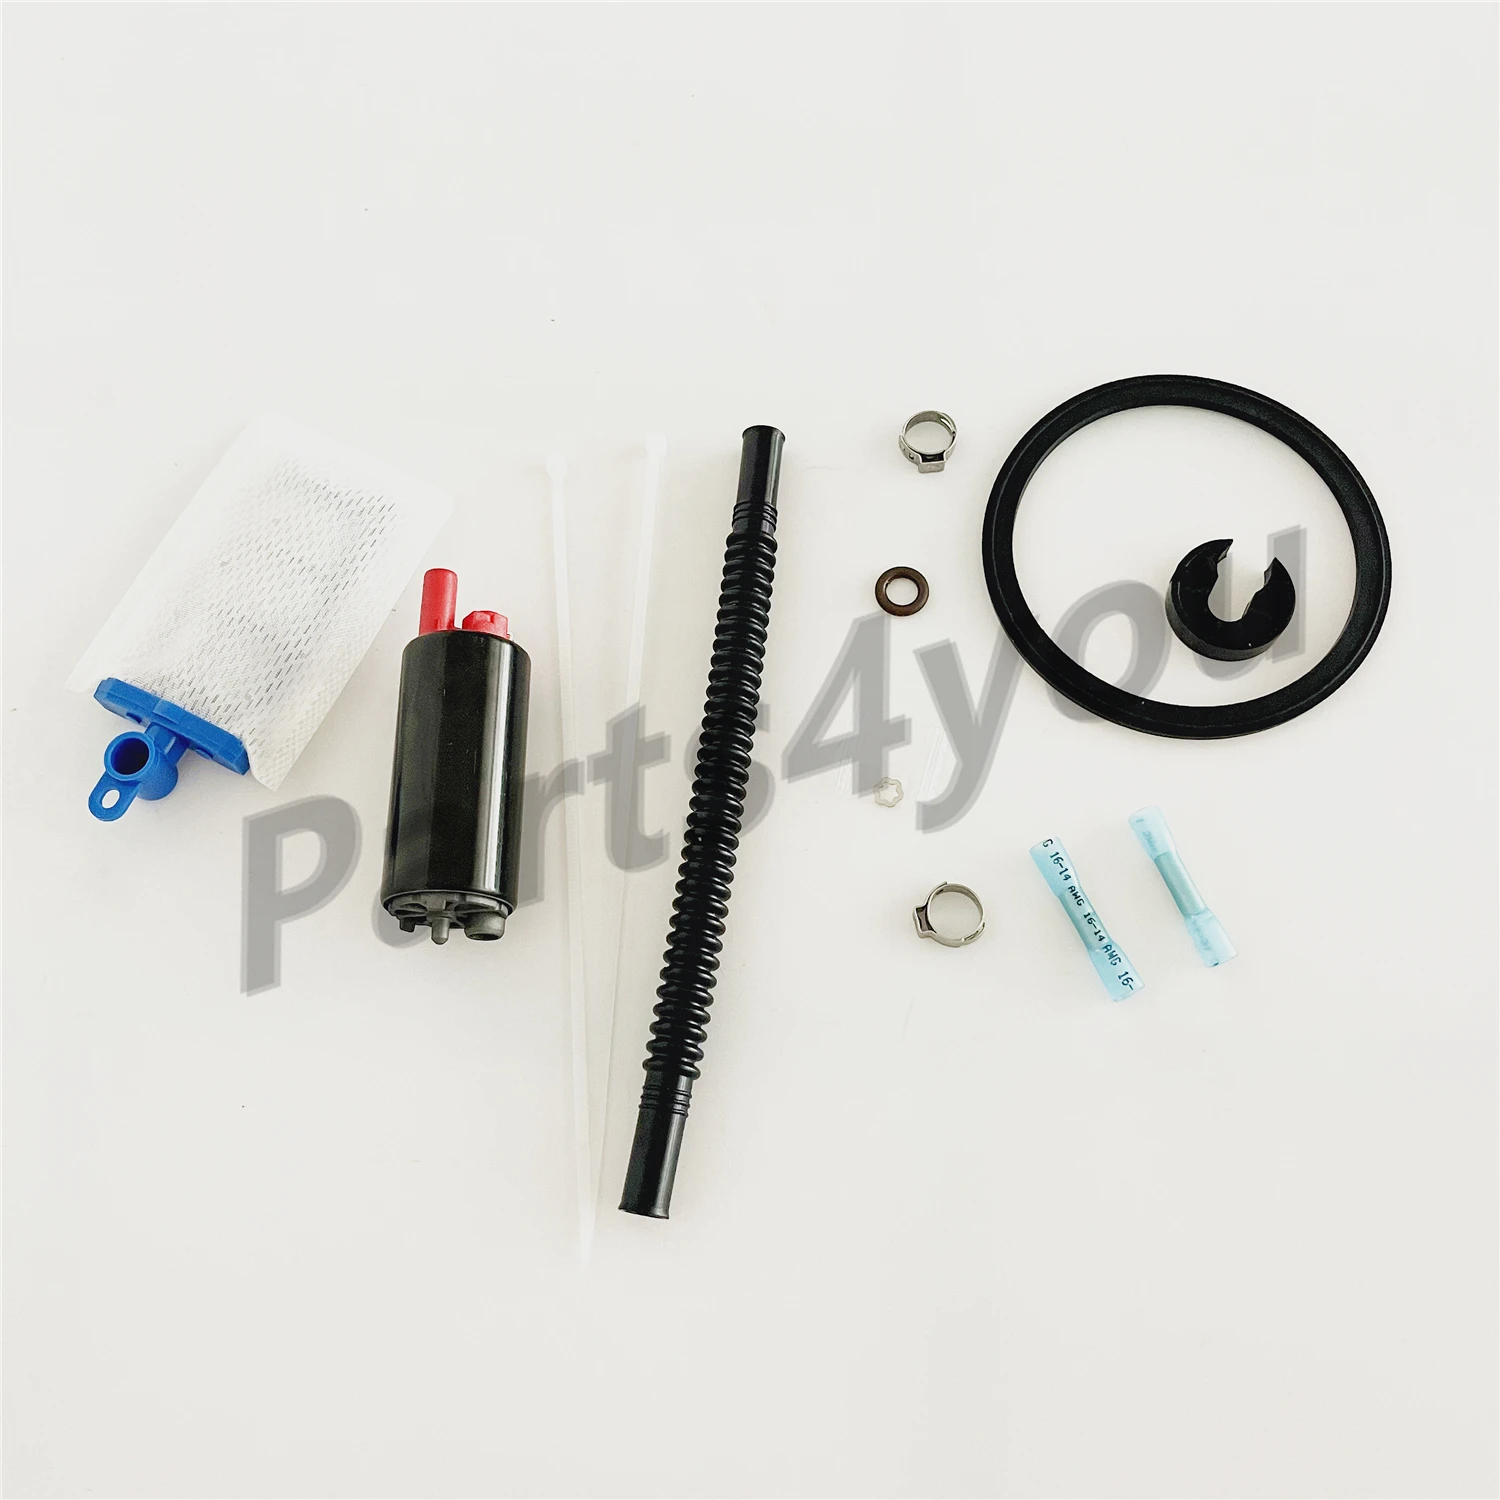 Fuel Pump Repair Kit for Polaris RZR Ranger Scrambler Sportsman 570 800 850 900 1000 2204401 455194 2204402 2521436 2204502